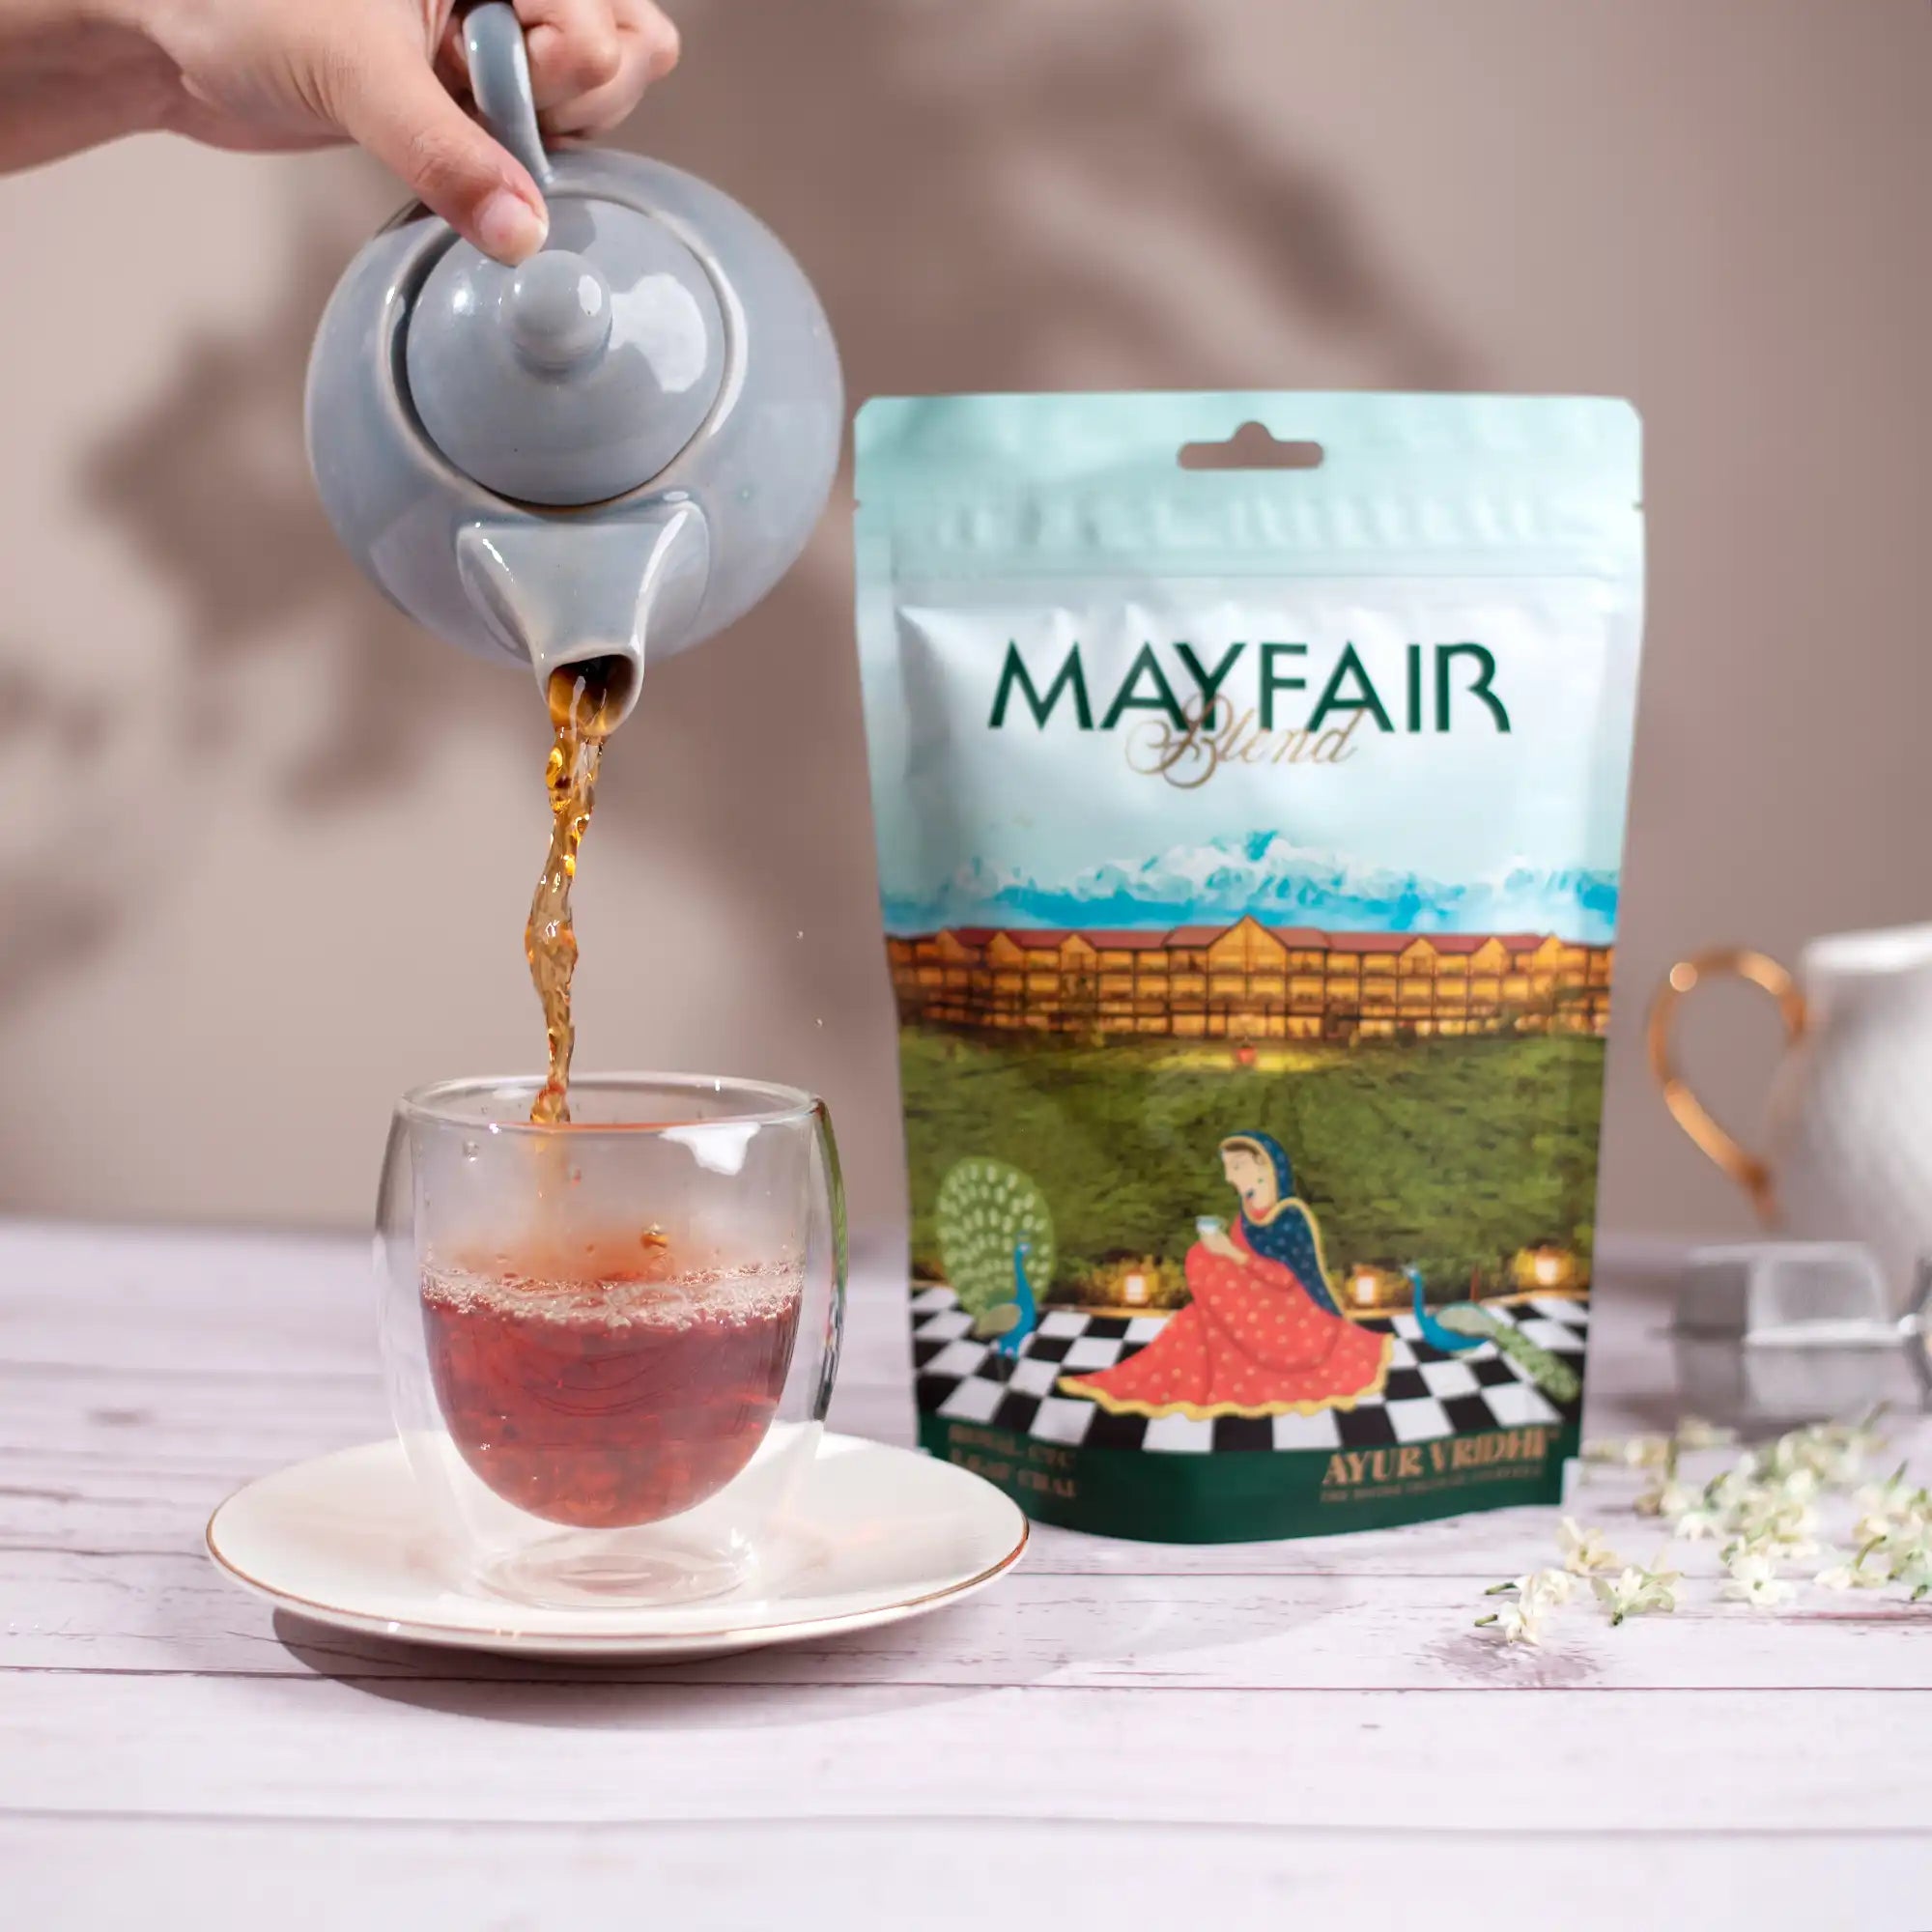 Mayfair Blend Royal CTC Leaf Chai 250 gms